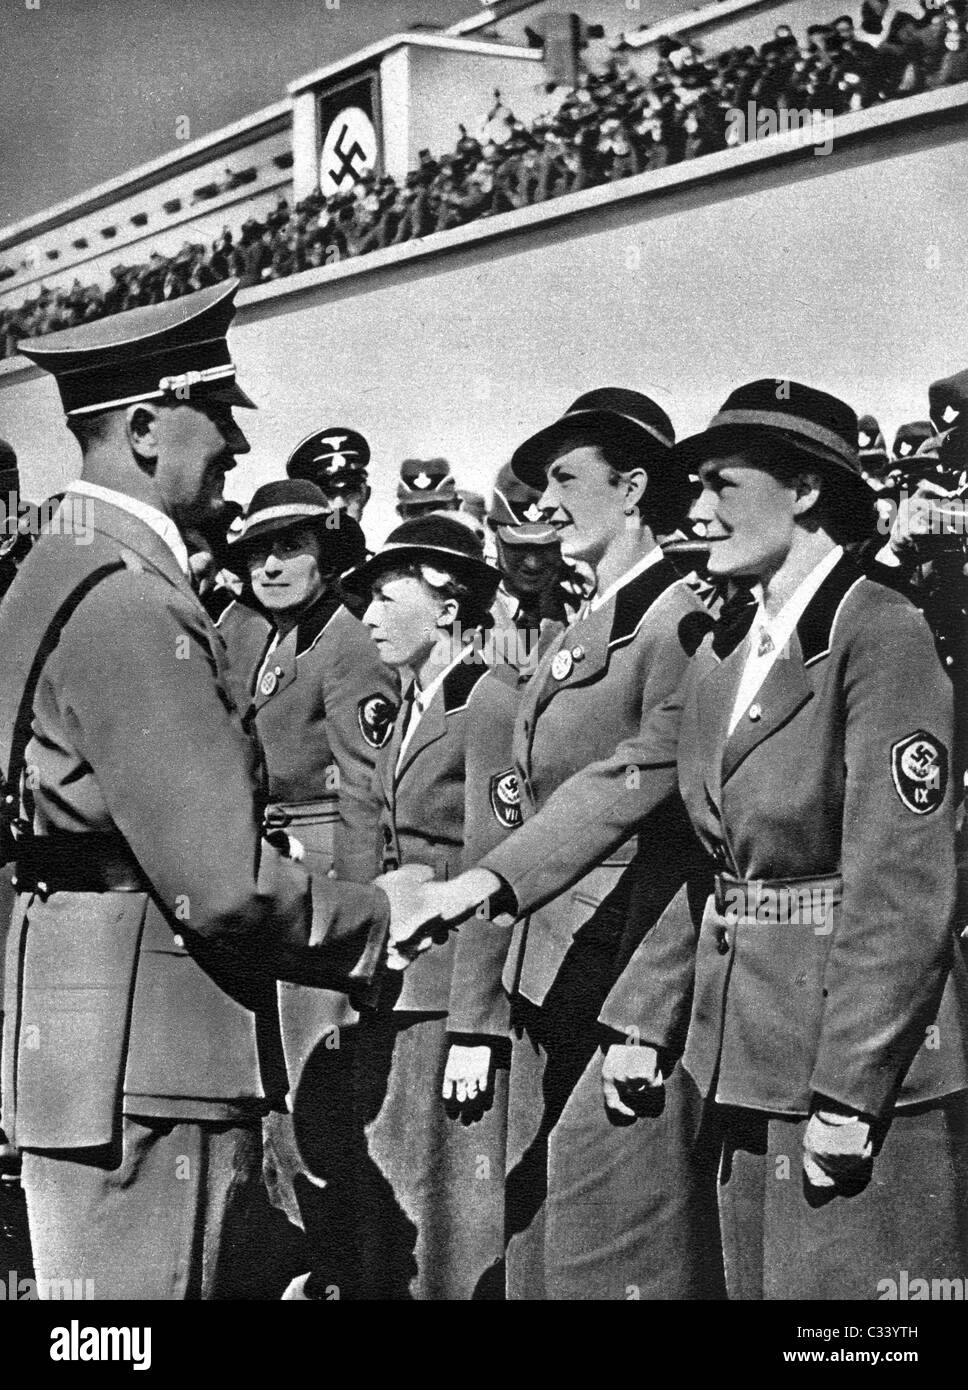 RADWJ (young womens labor organizatIon) officers greeting Fuhrer Adolf Hitler. Germany c1939. Stock Photo